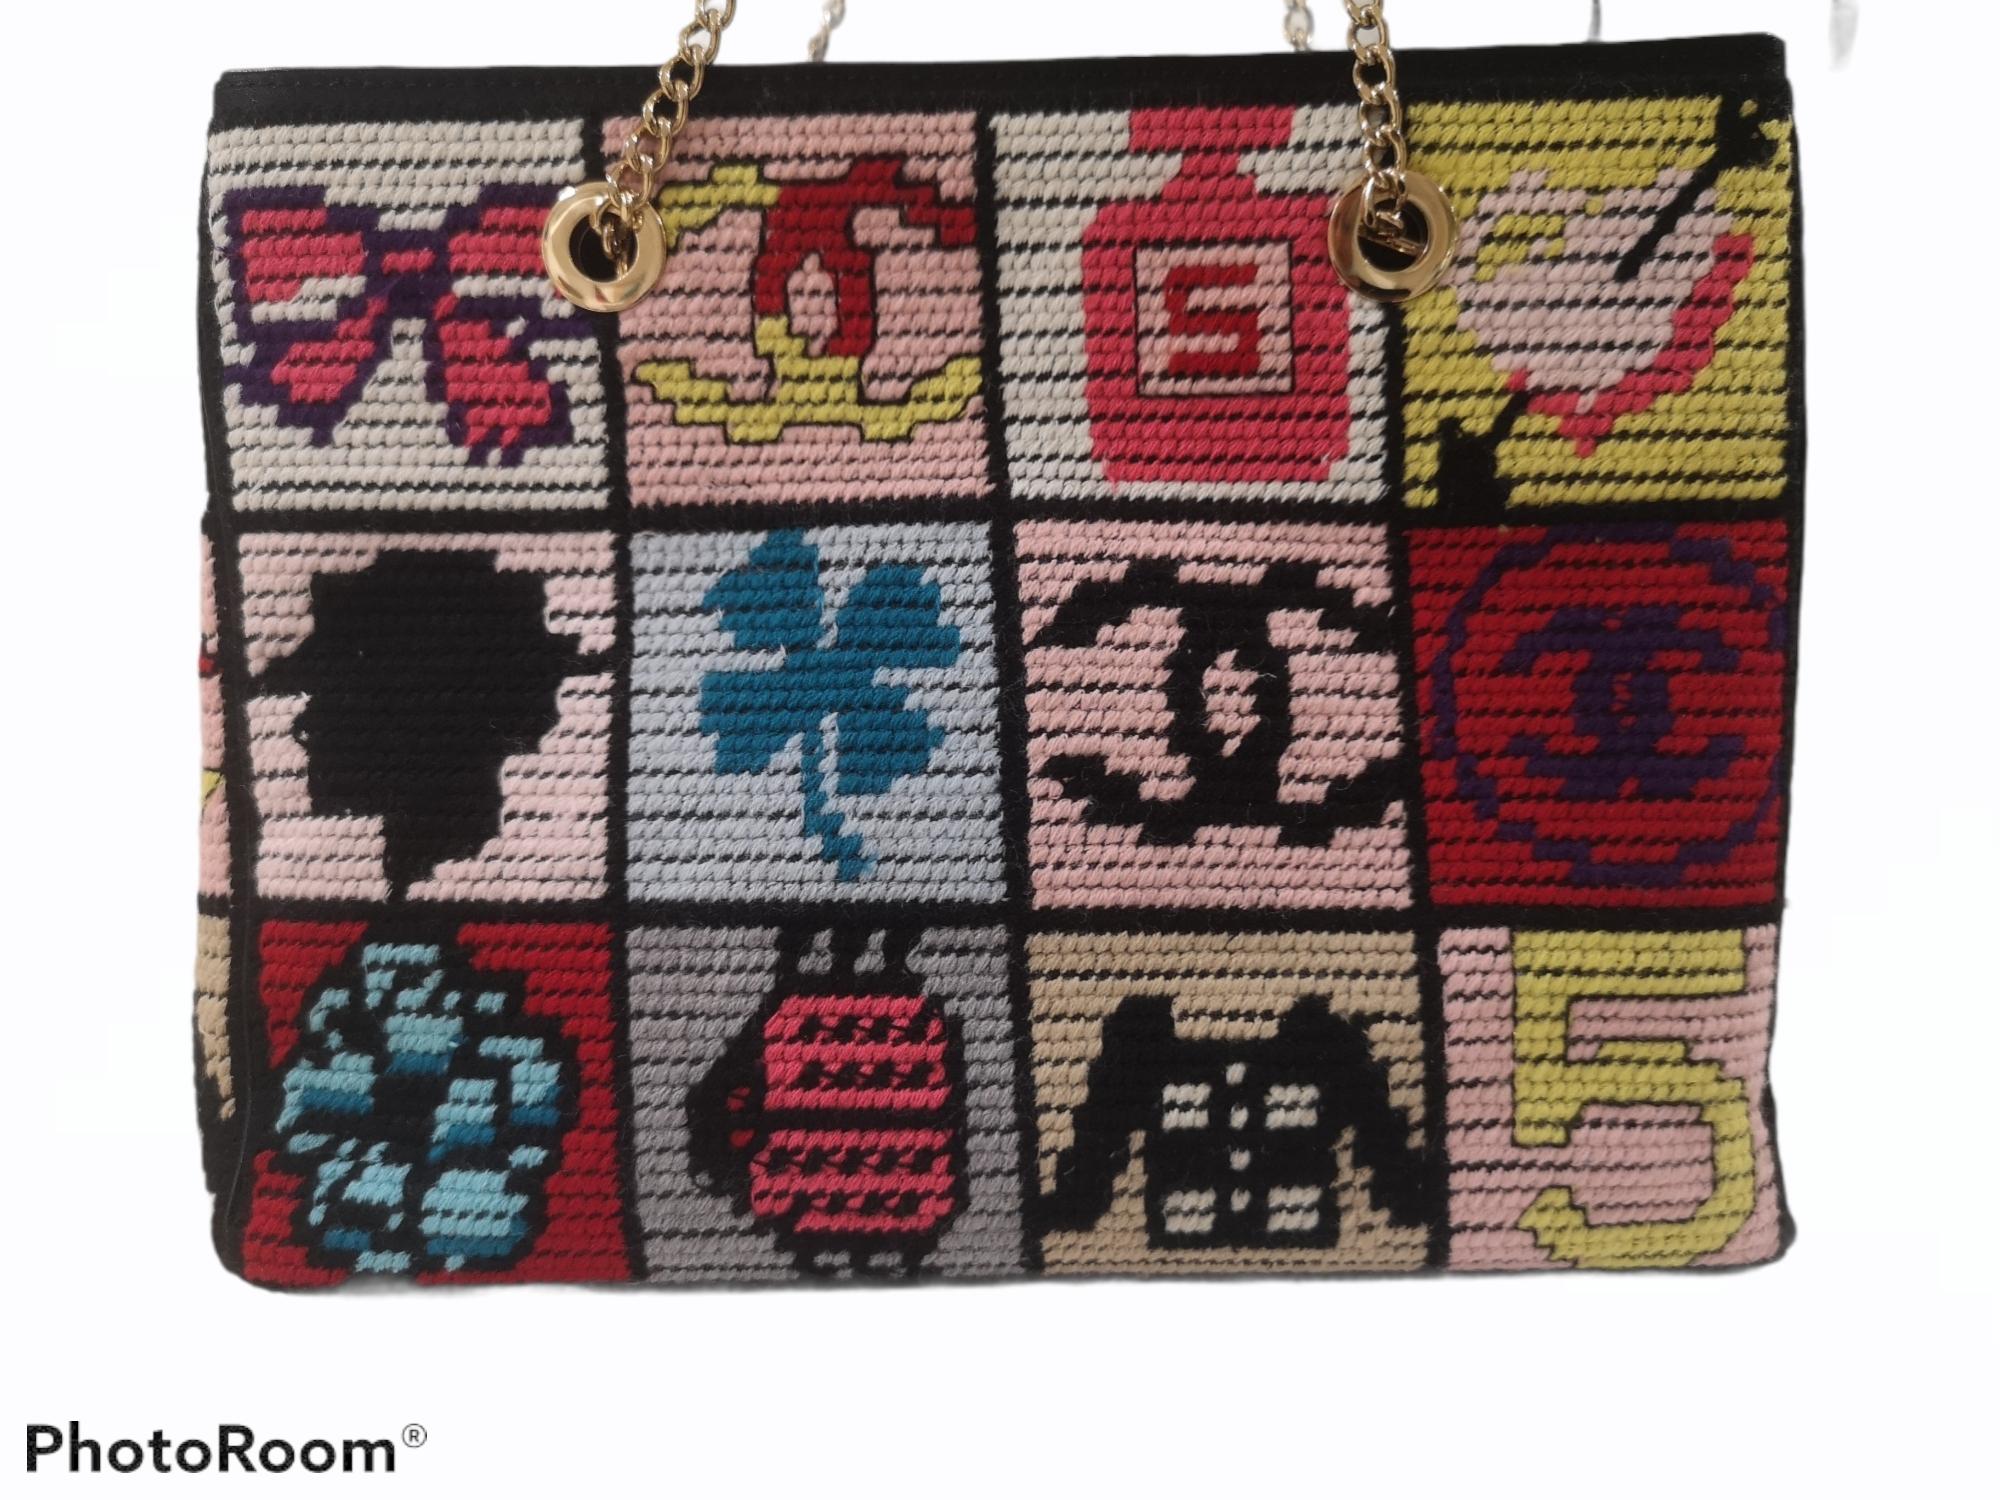 Chanel needlepoint symbols multicoloured shoulder bag 
Black leather, multicoloured needlepoint, gold tone hardware, cc logo
Measurements: 29 * 22 cm, depth 7 cm